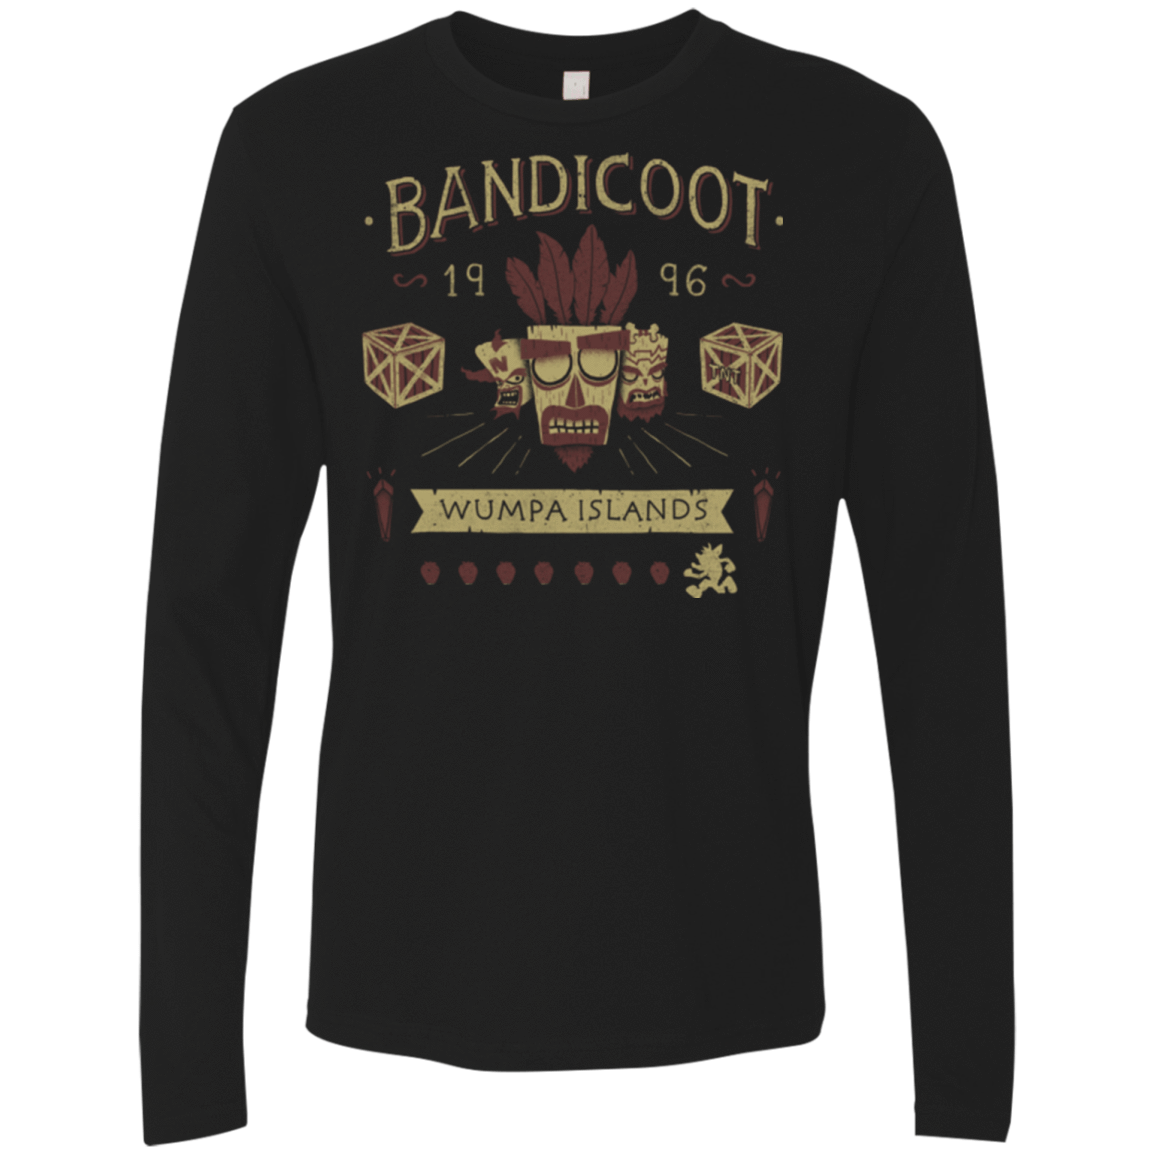 T-Shirts Black / Small Bandicoot Time Men's Premium Long Sleeve